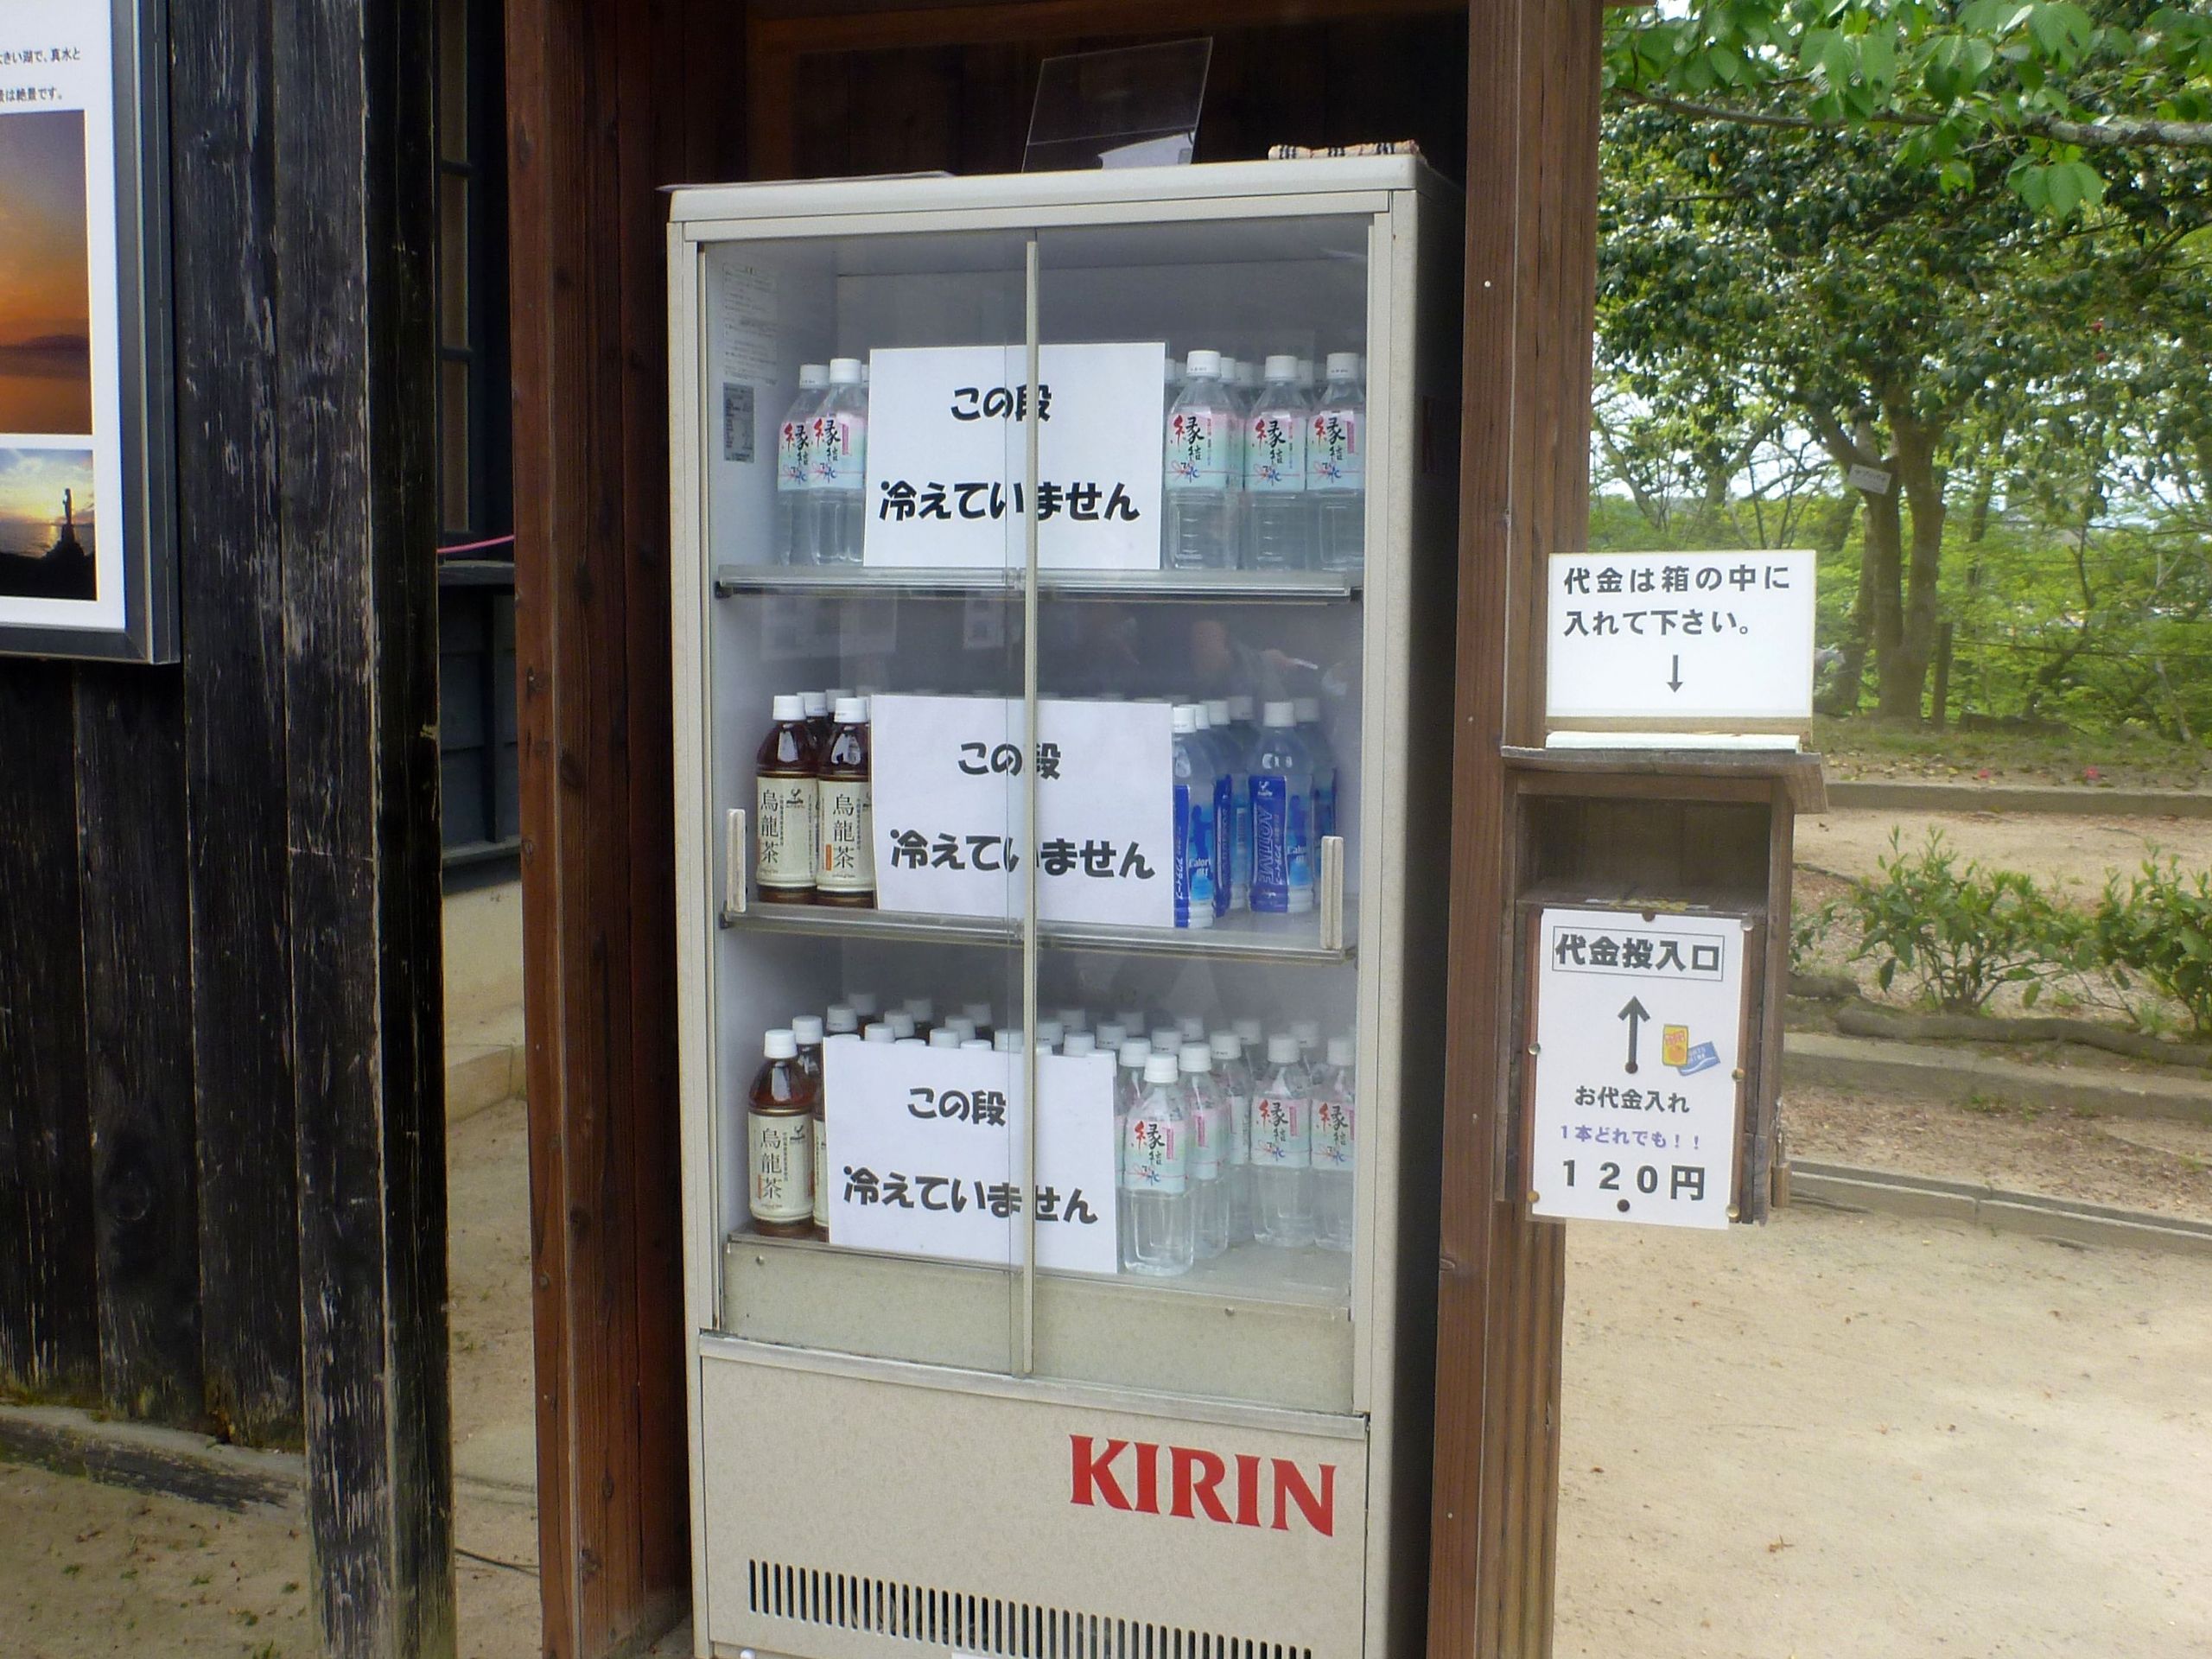 Kirin Vending Machine. Sales places